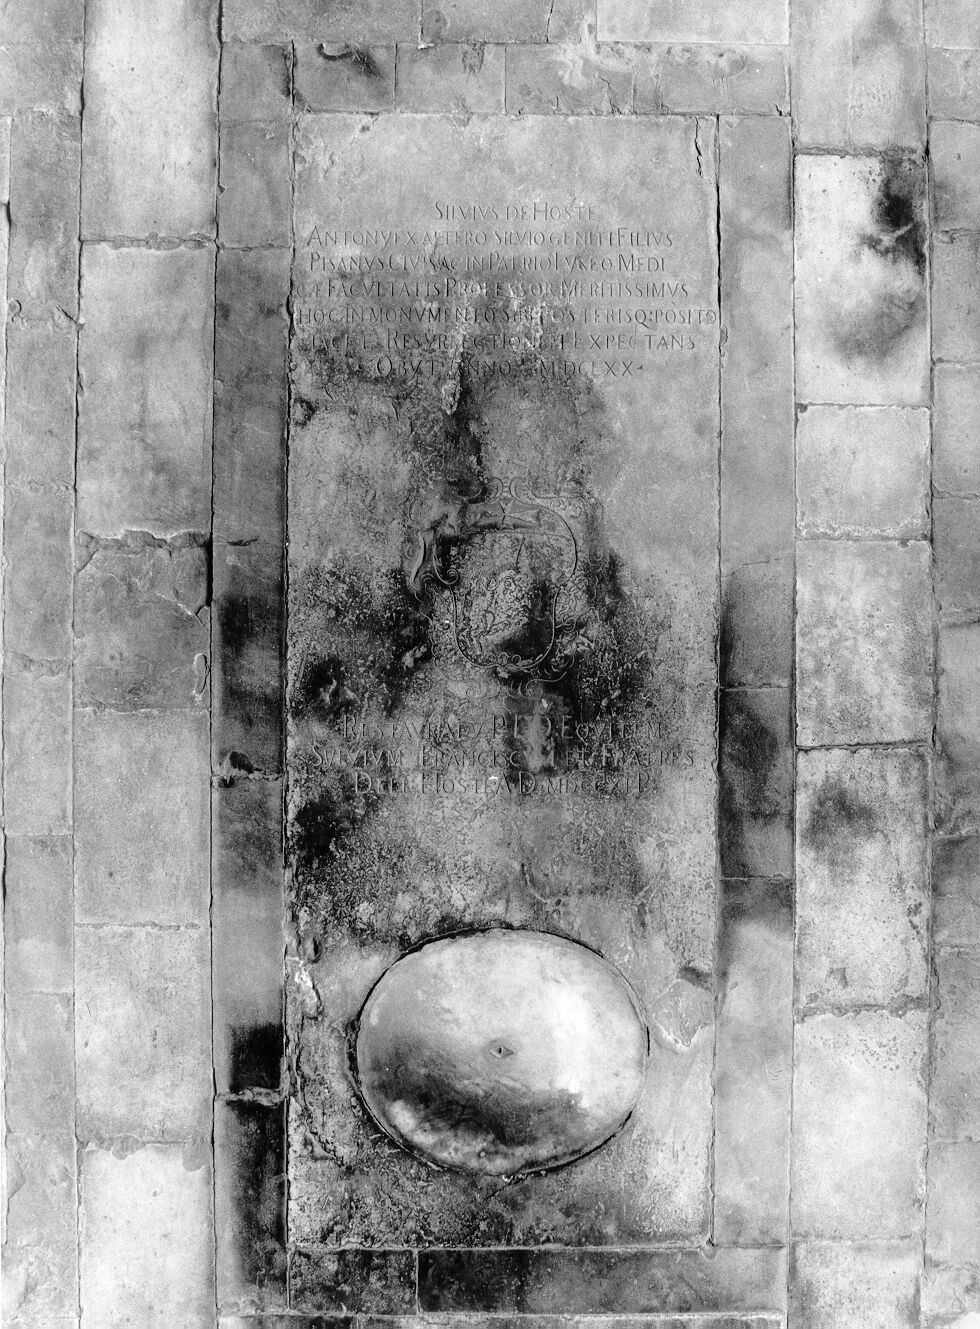 Silvio Dell'Oste (lastra tombale) - bottega pisana (secc. XVII/ XVIII)